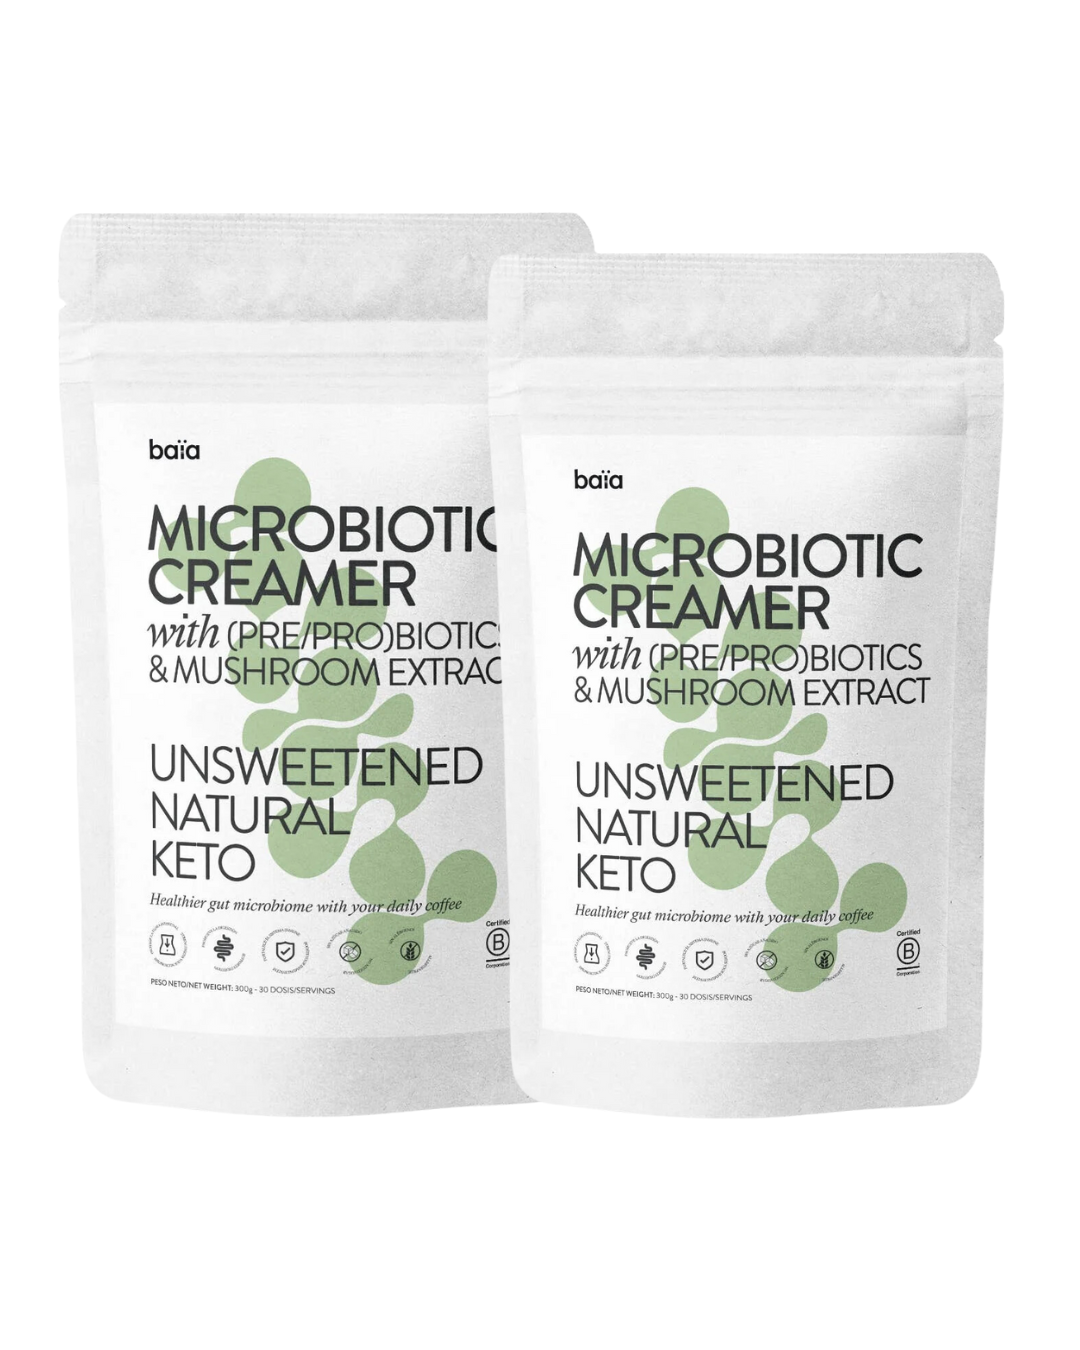 2 Microbiotic Creamer Pack - 16_6e492ac7-8449-4aa9-83e2-2da0494ebec8